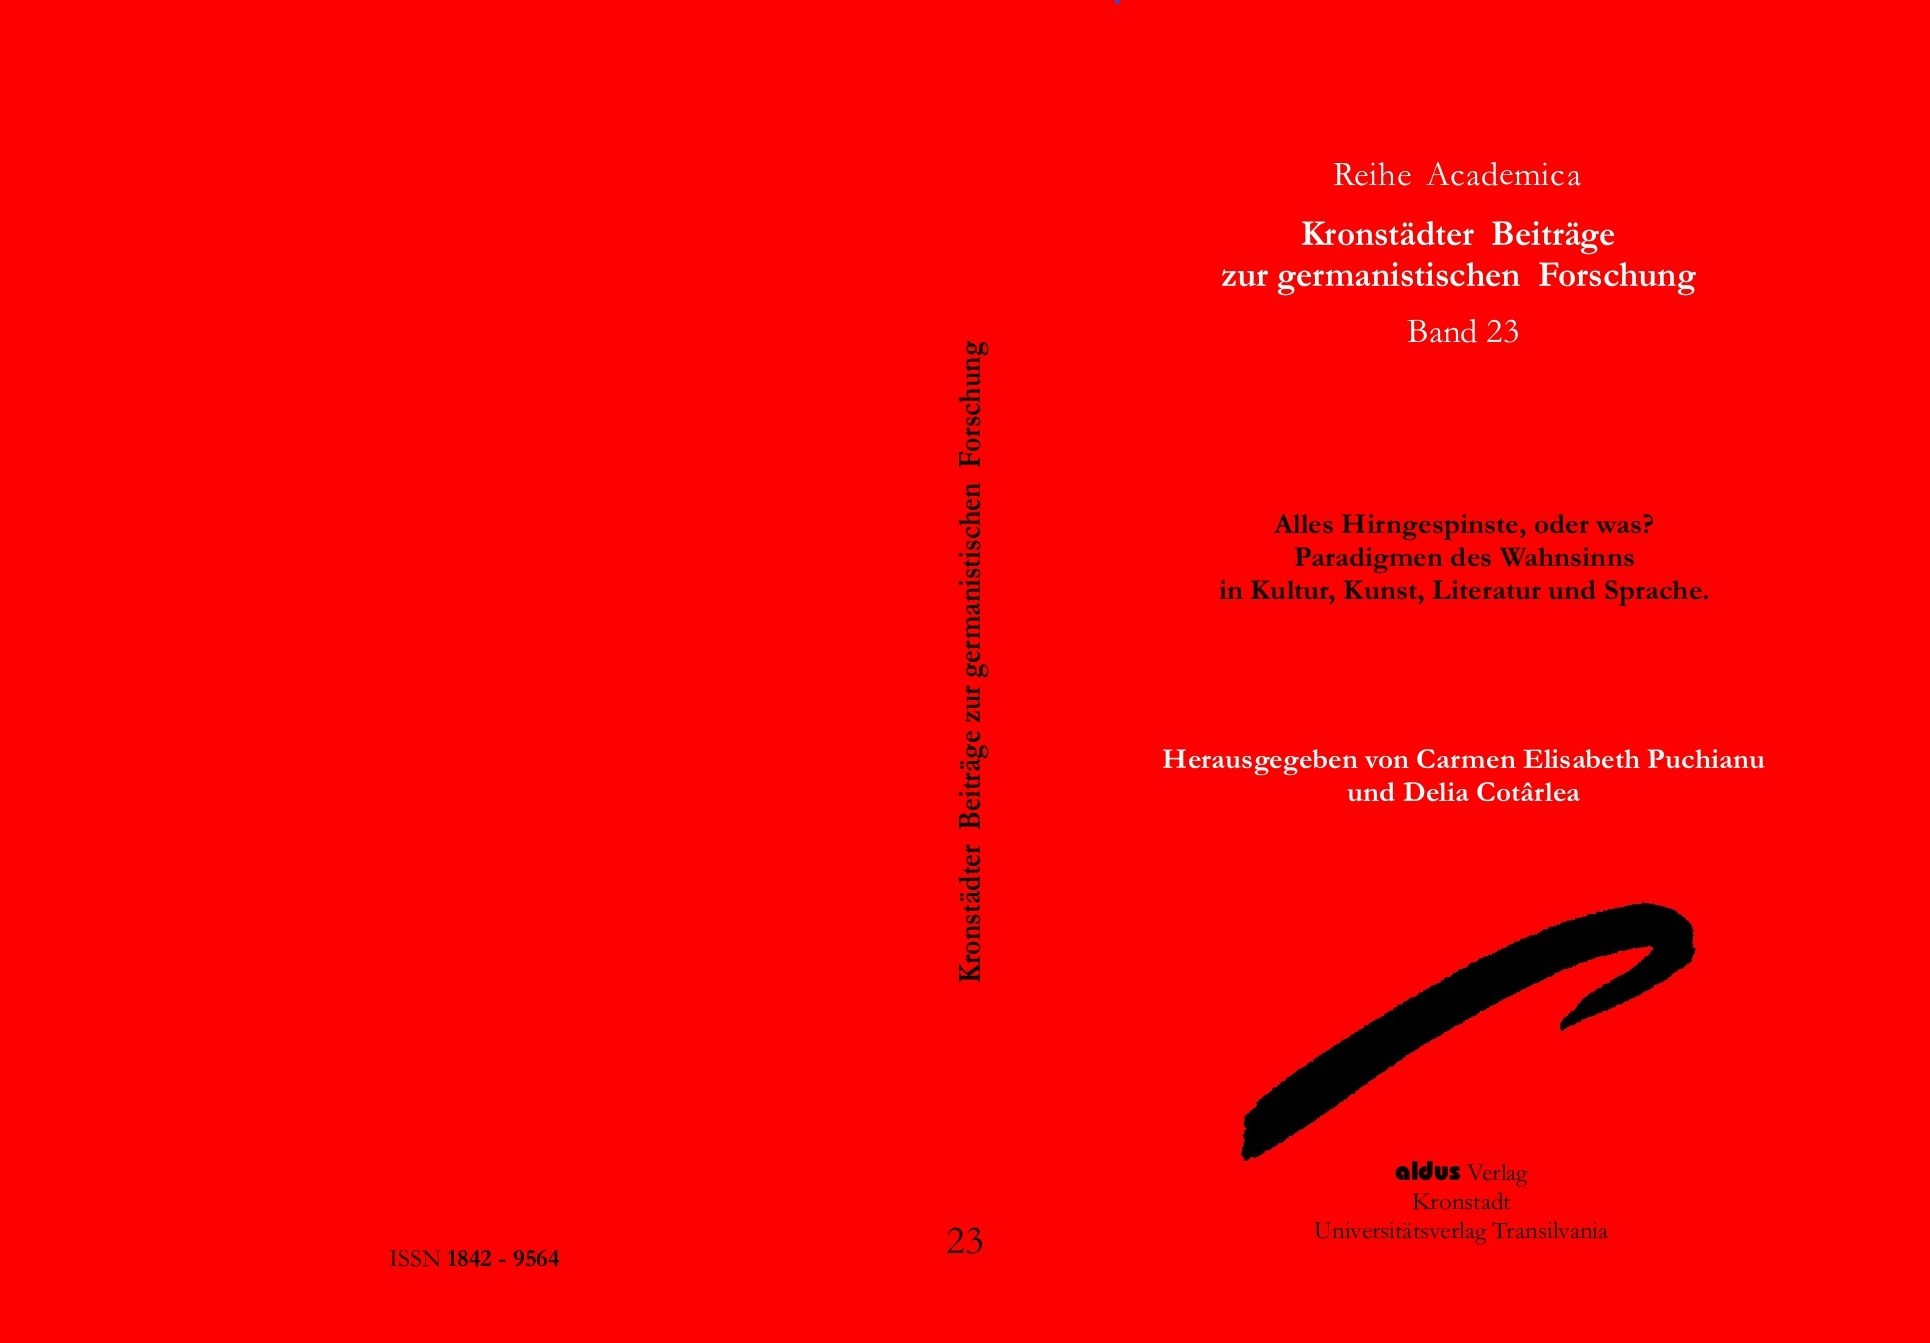 Sociogram of the Disturbed Protagonist in Ulrich Plenzdorf's "Kein runter kein fern" Cover Image